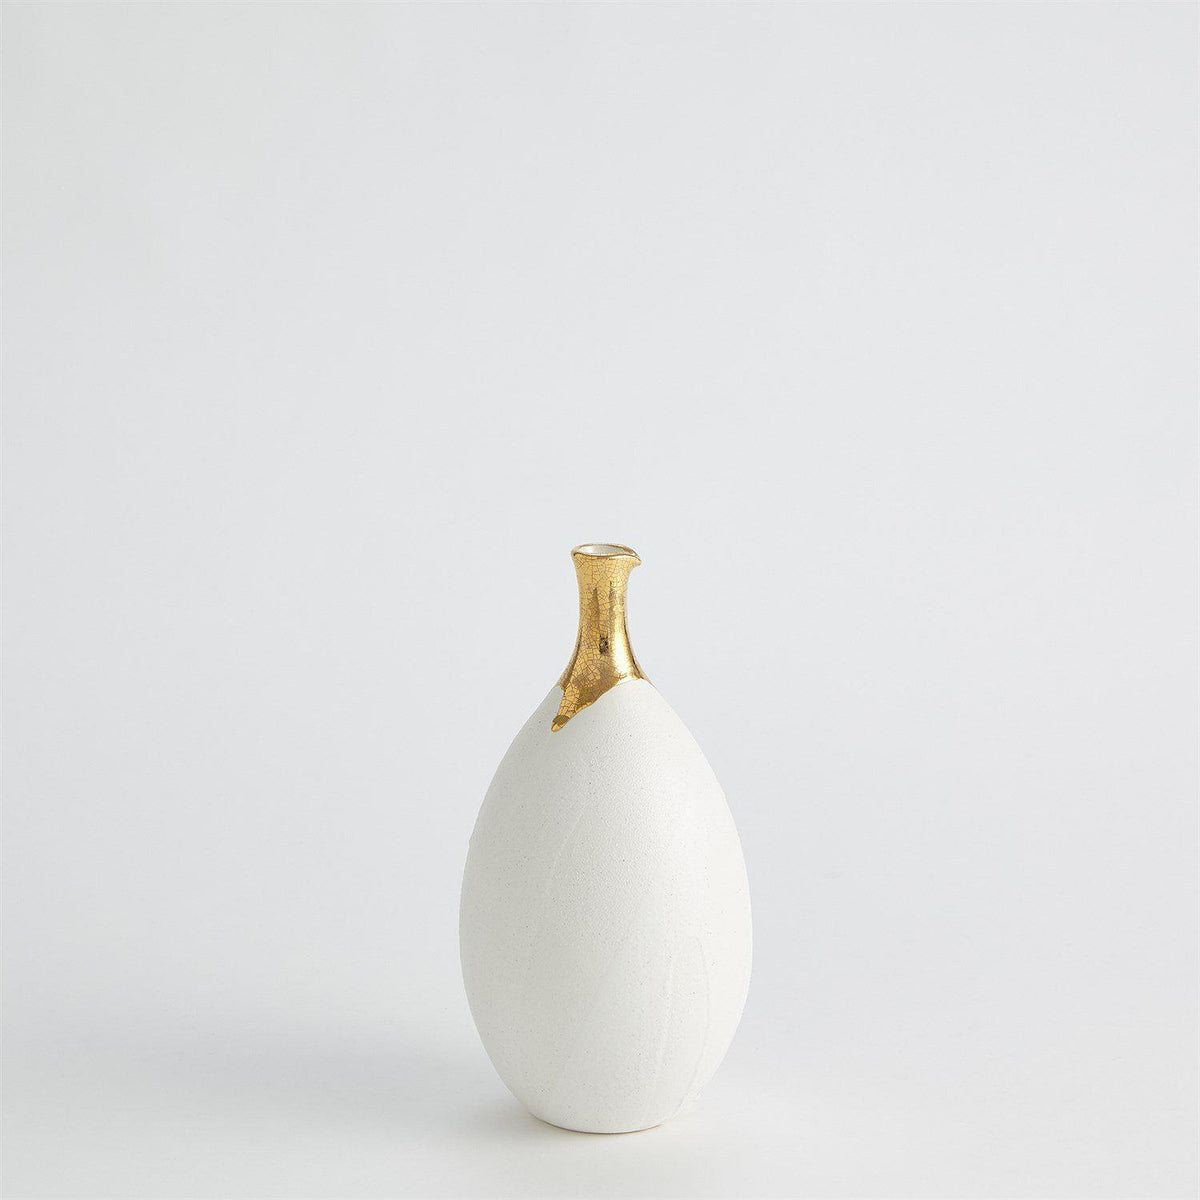 Dipped Golden Crackle/White Vases-Global Views-Vases-Artistic Elements